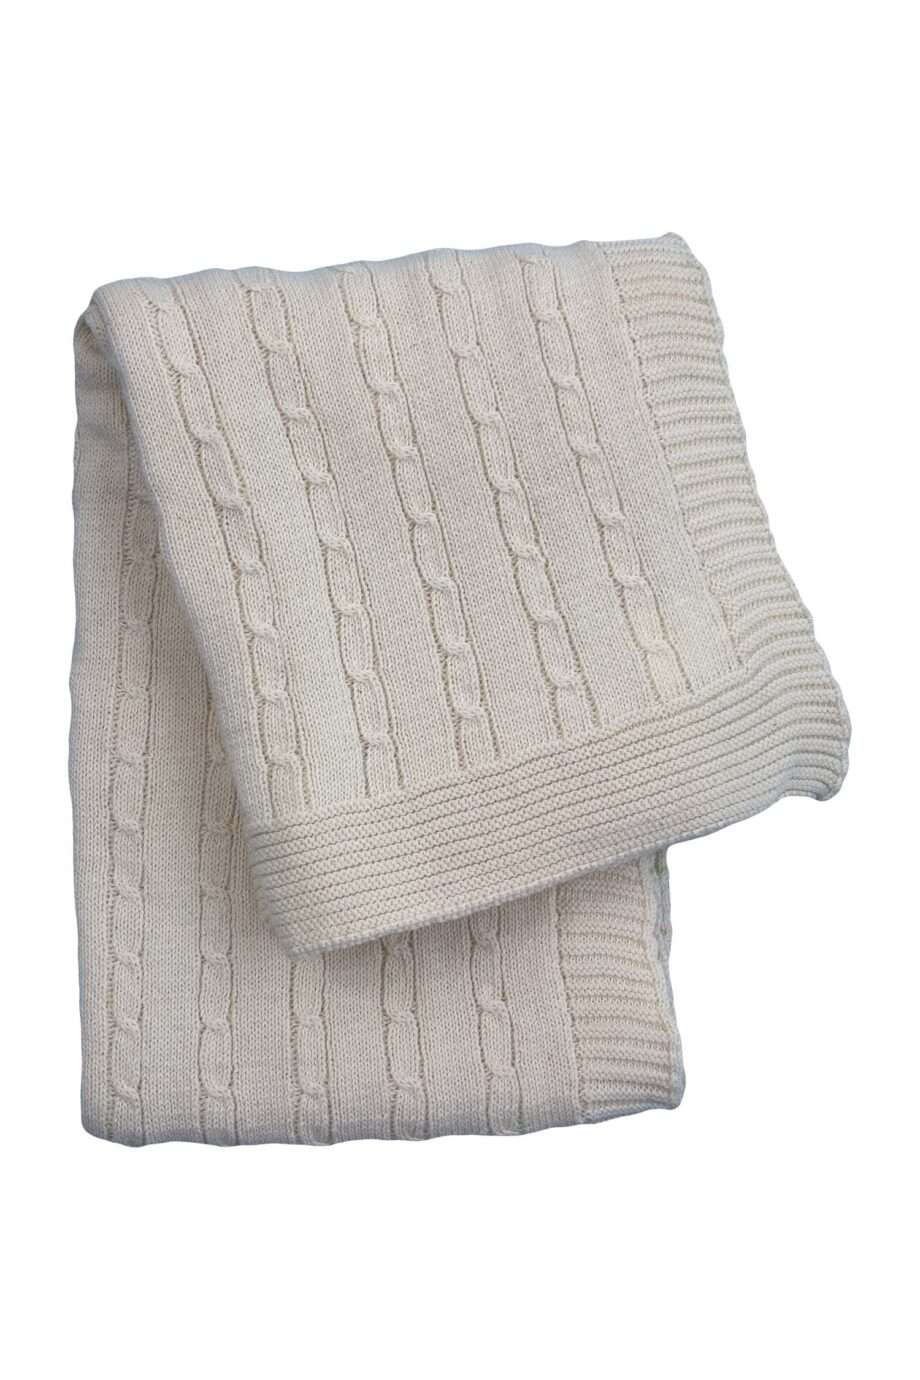 twist small ecru knitted cotton little blanket medium